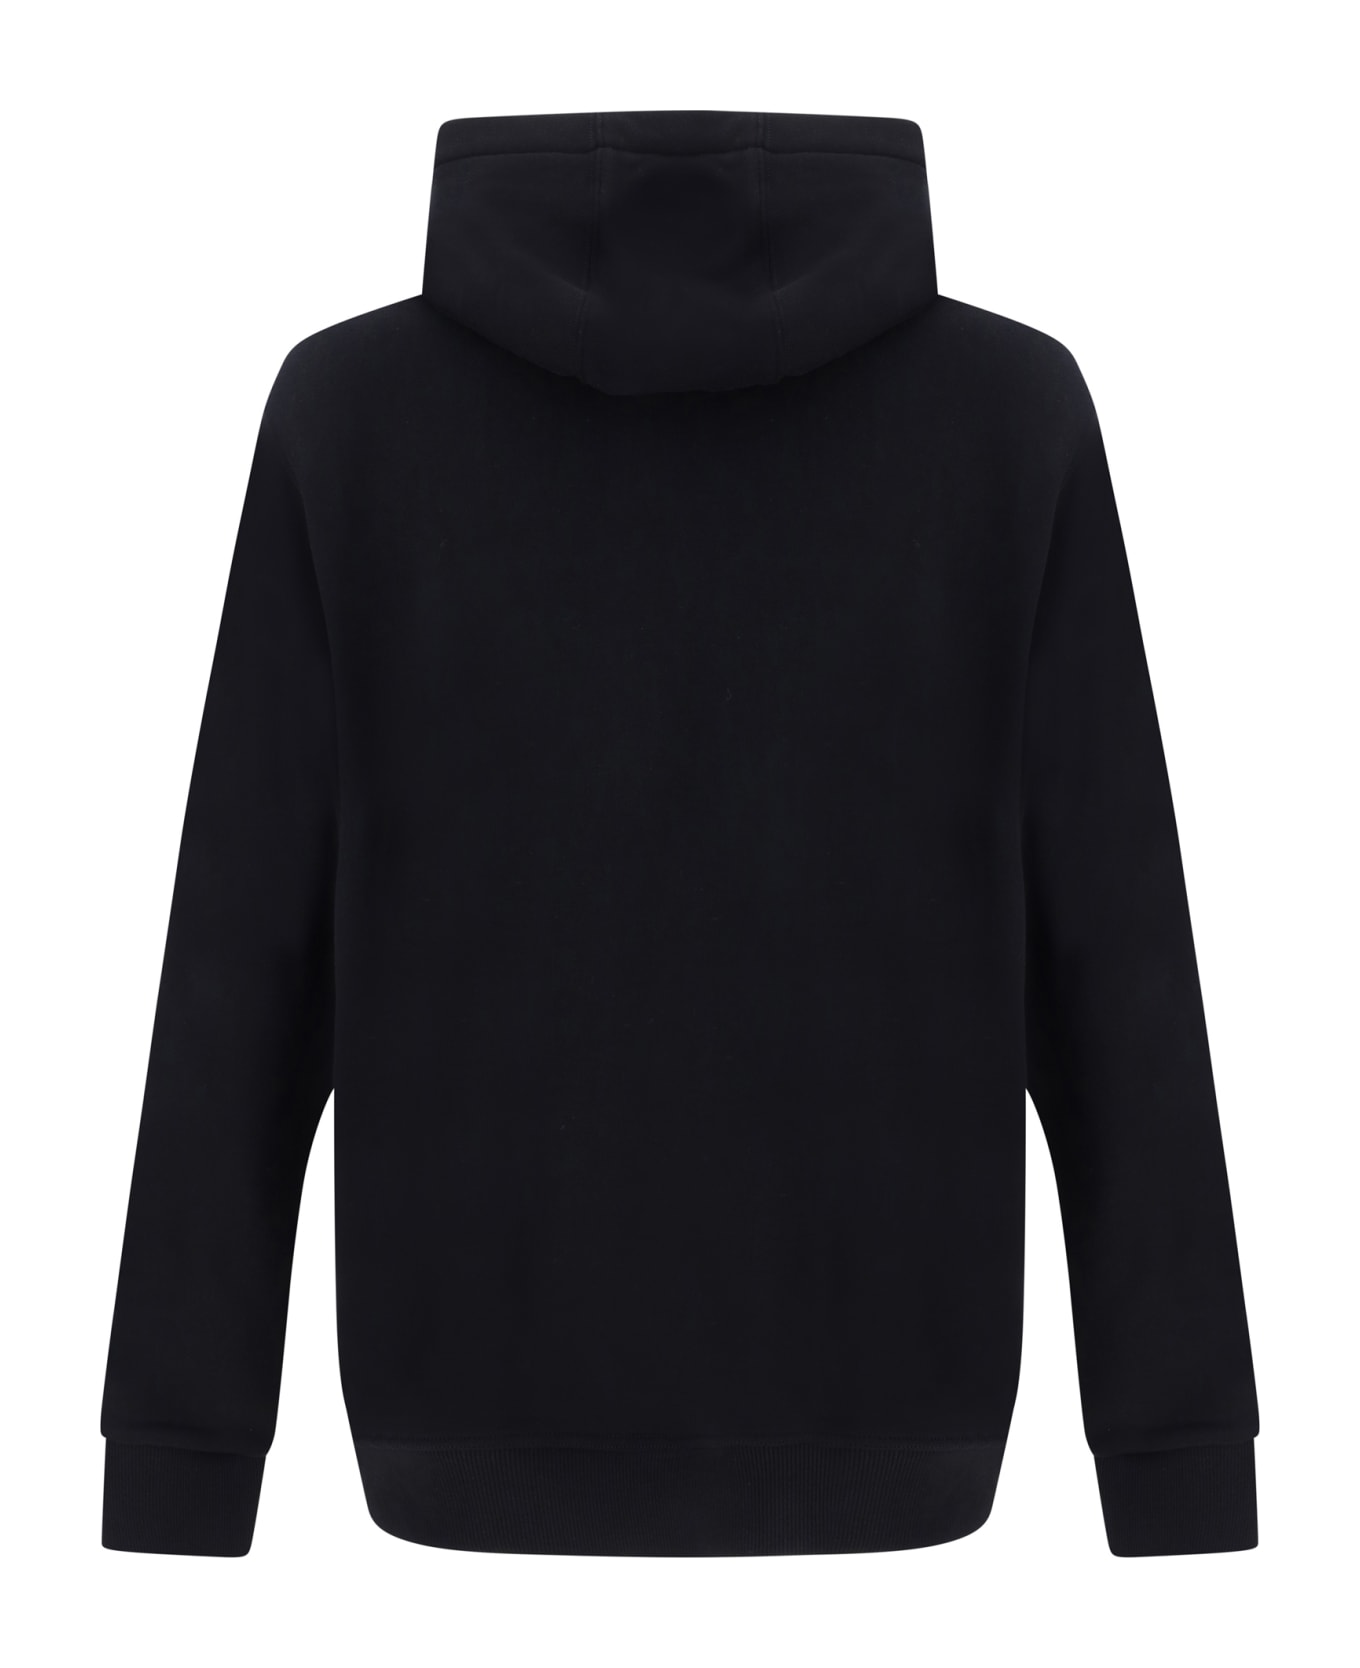 Burberry Black Cotton Sweatshirt - Black